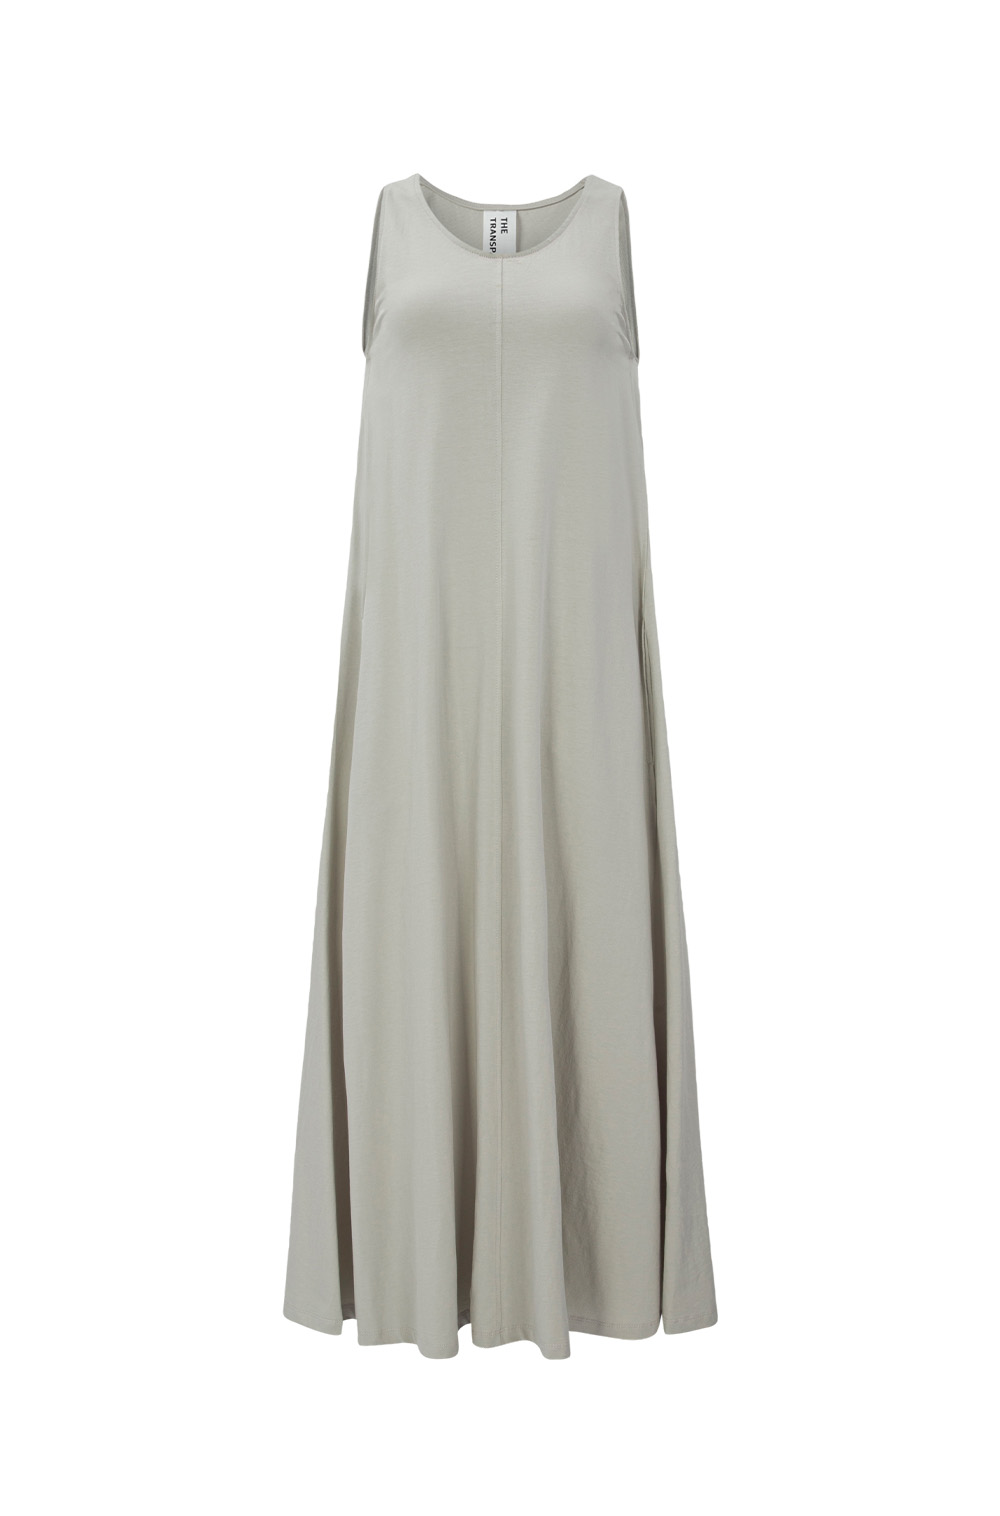 Sleeveless Maxi Dress (Olive grey)